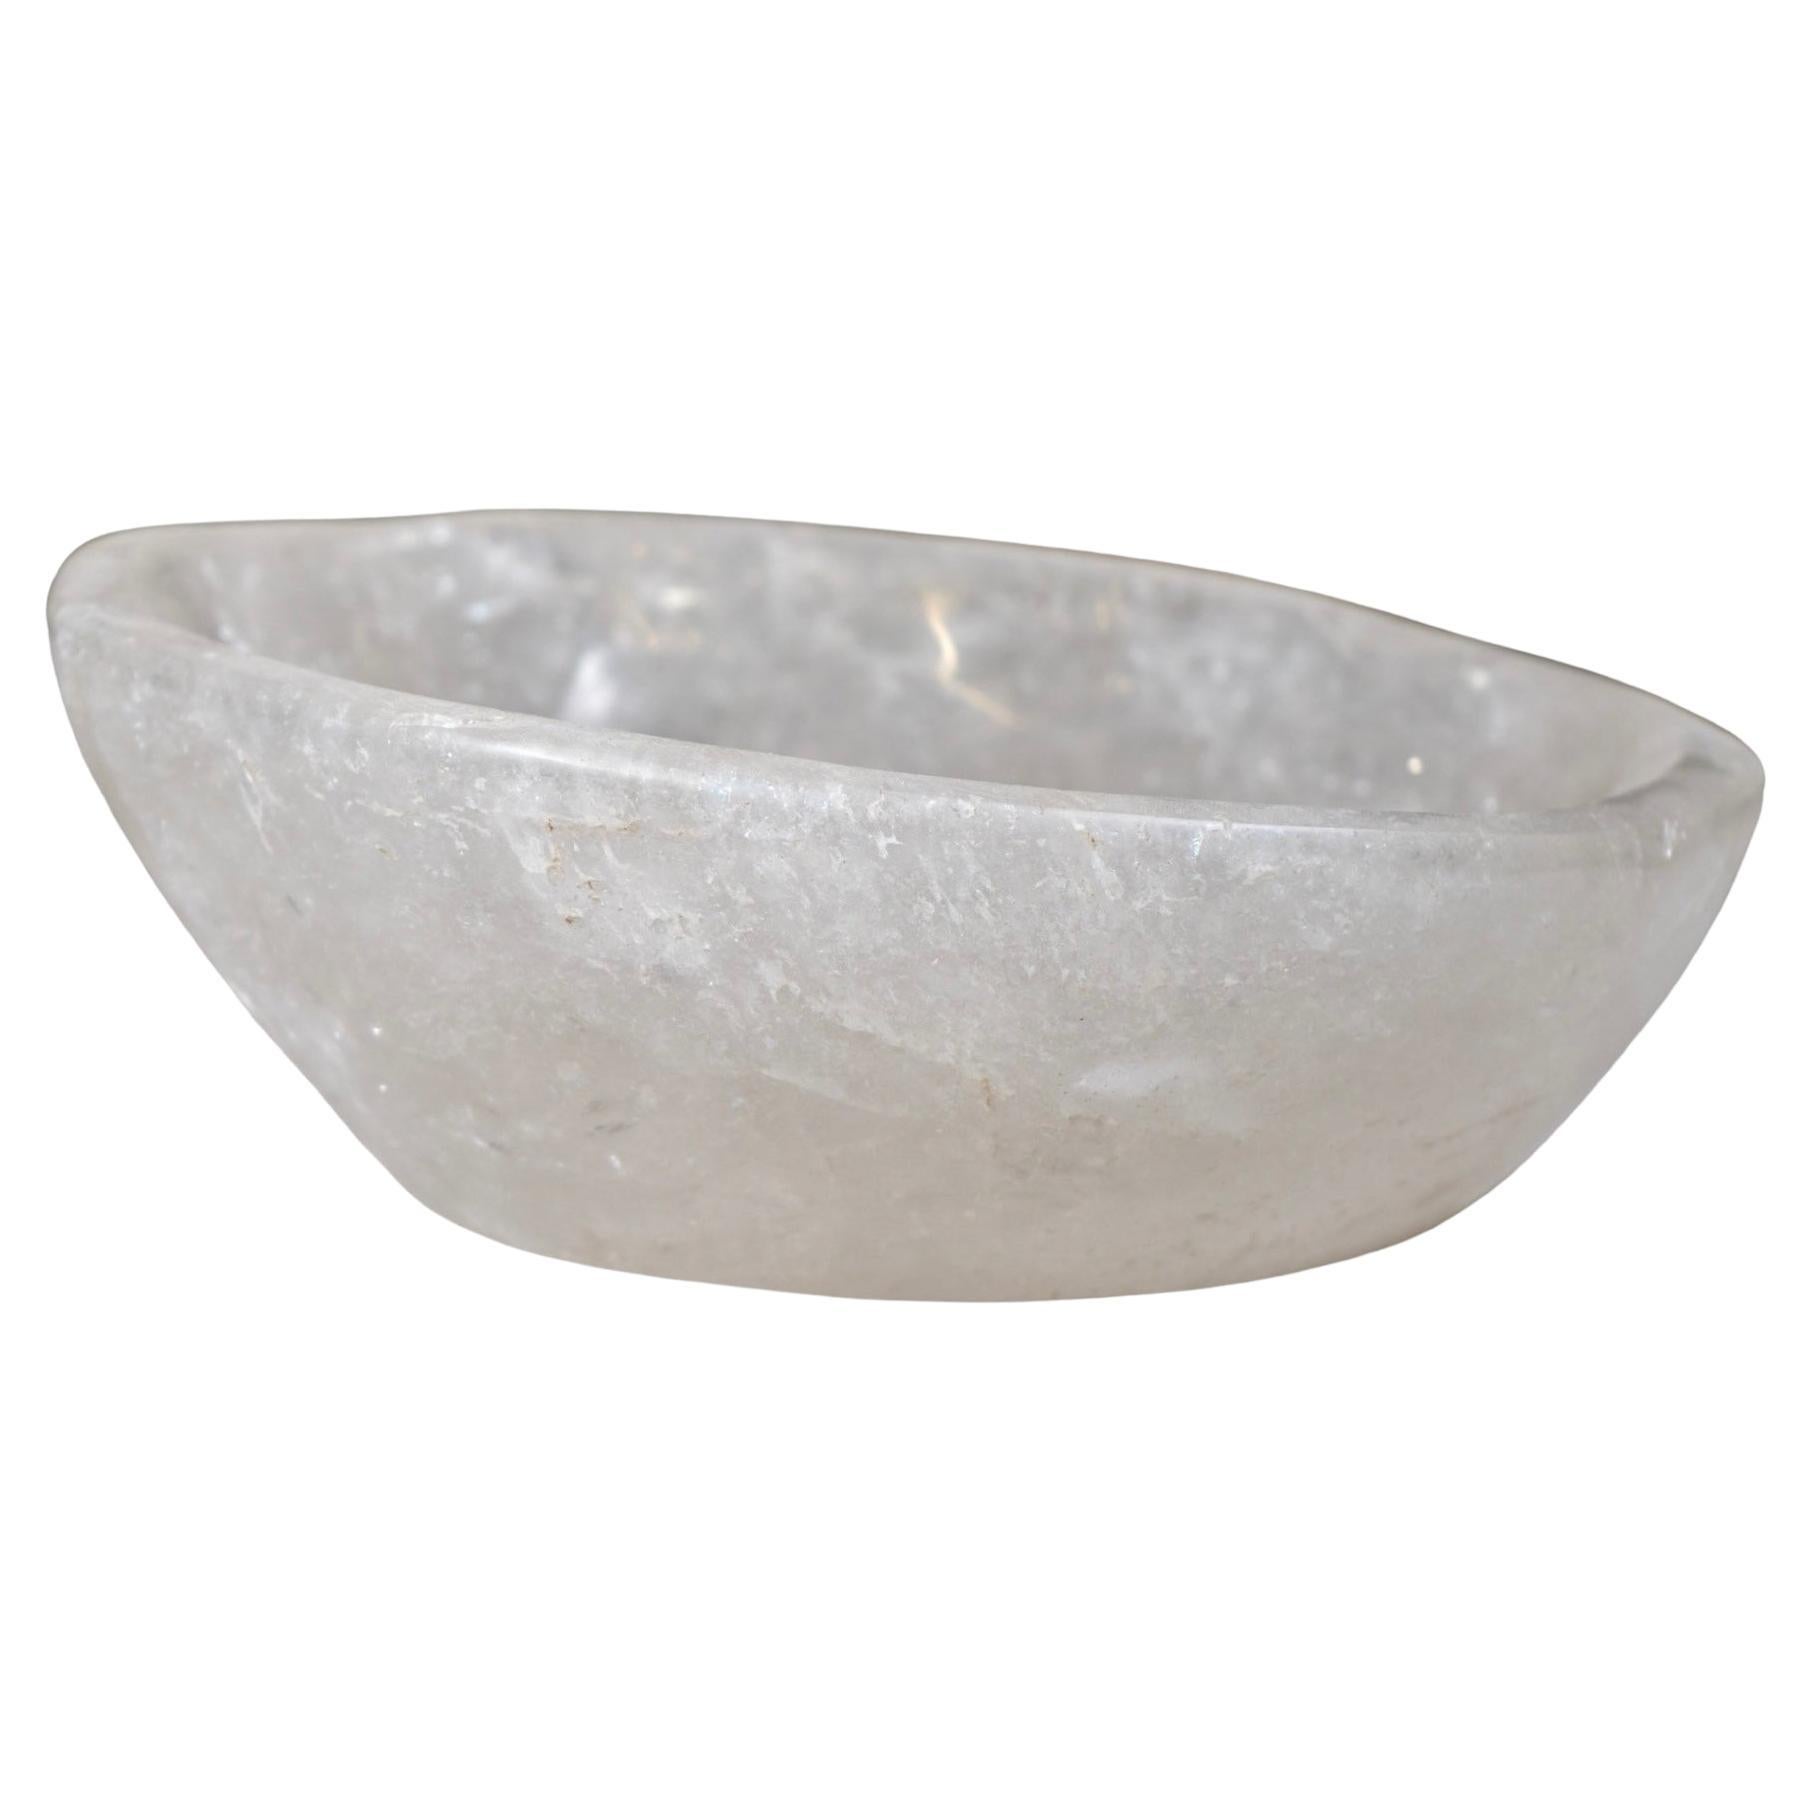 Brazilian Rock Crystal Sink Bowl For Sale